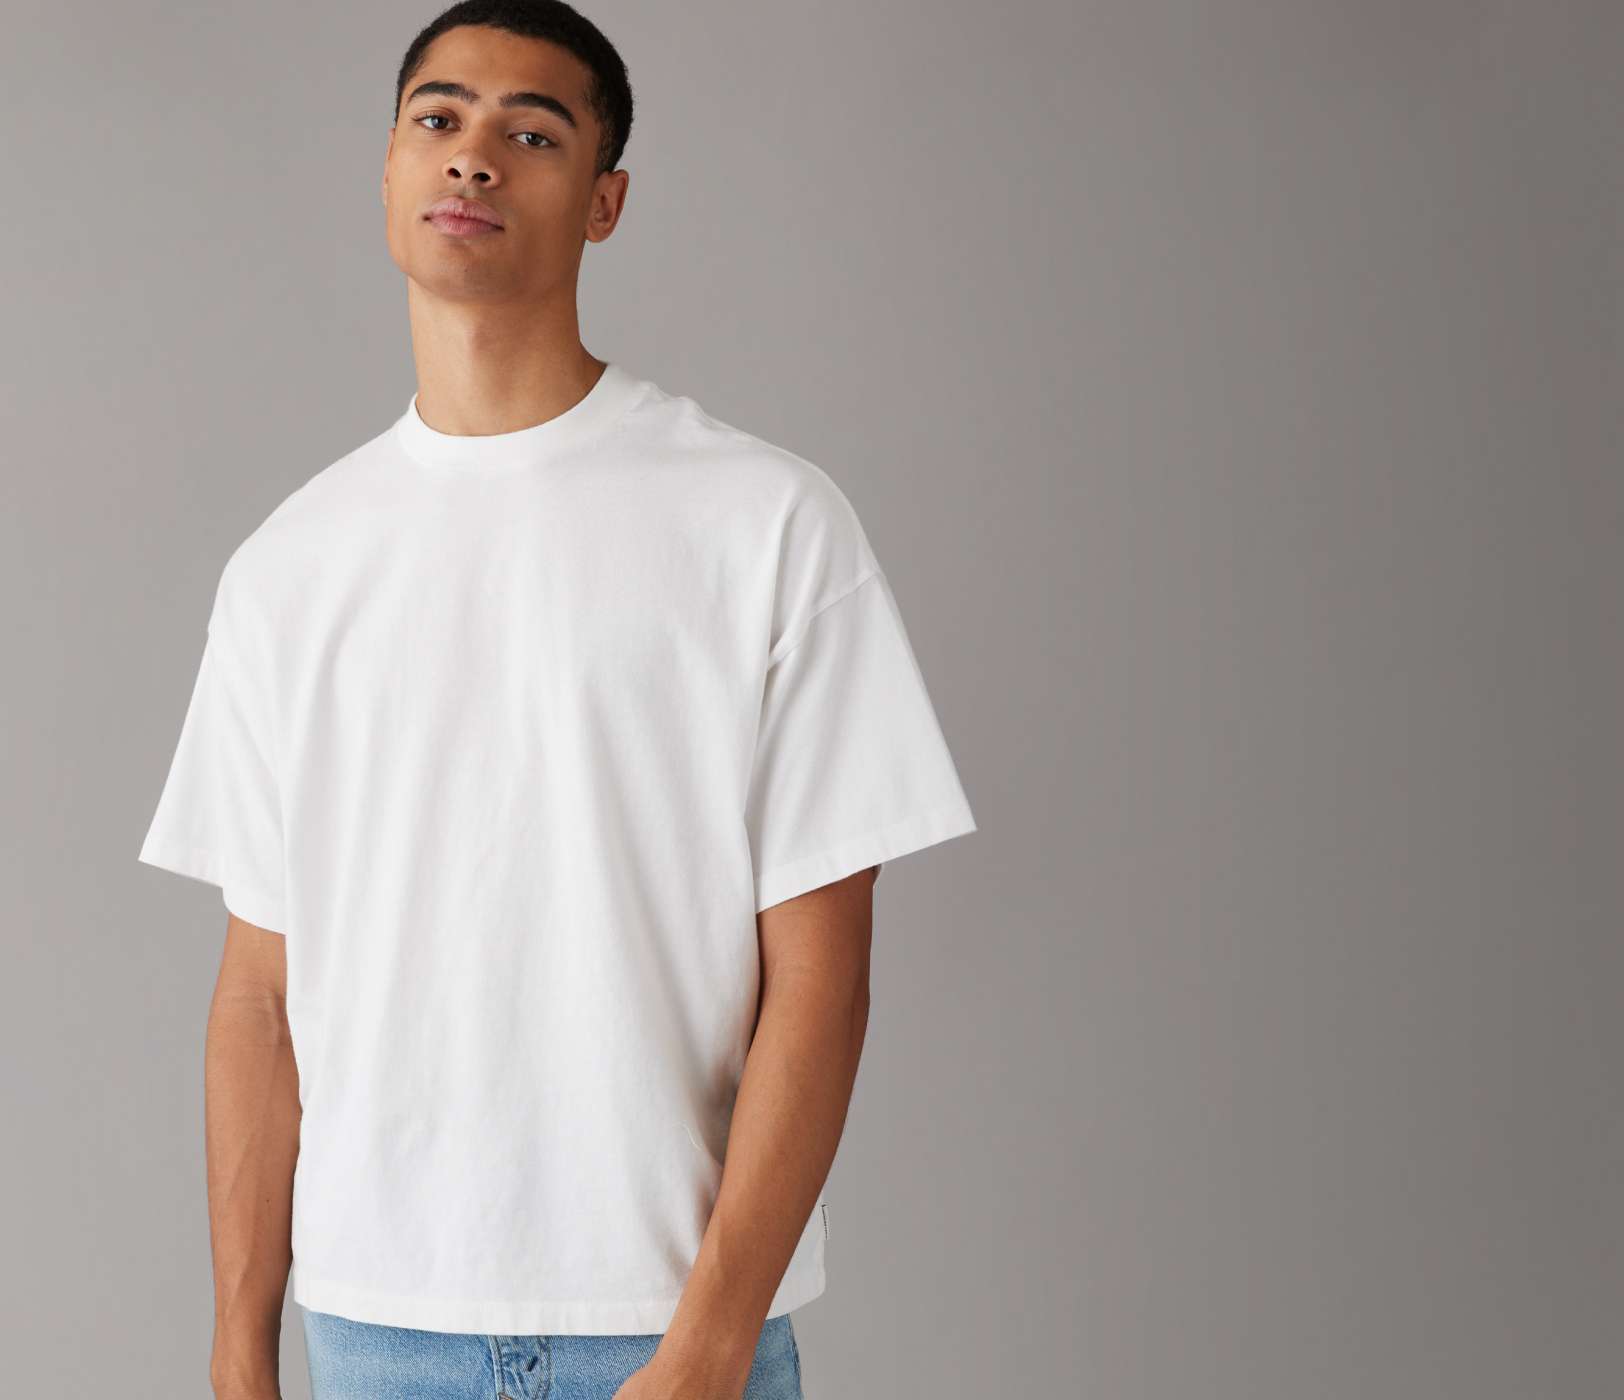 Men's T-Shirt Sale, Clearance Men's T-Shirts, White Stuff